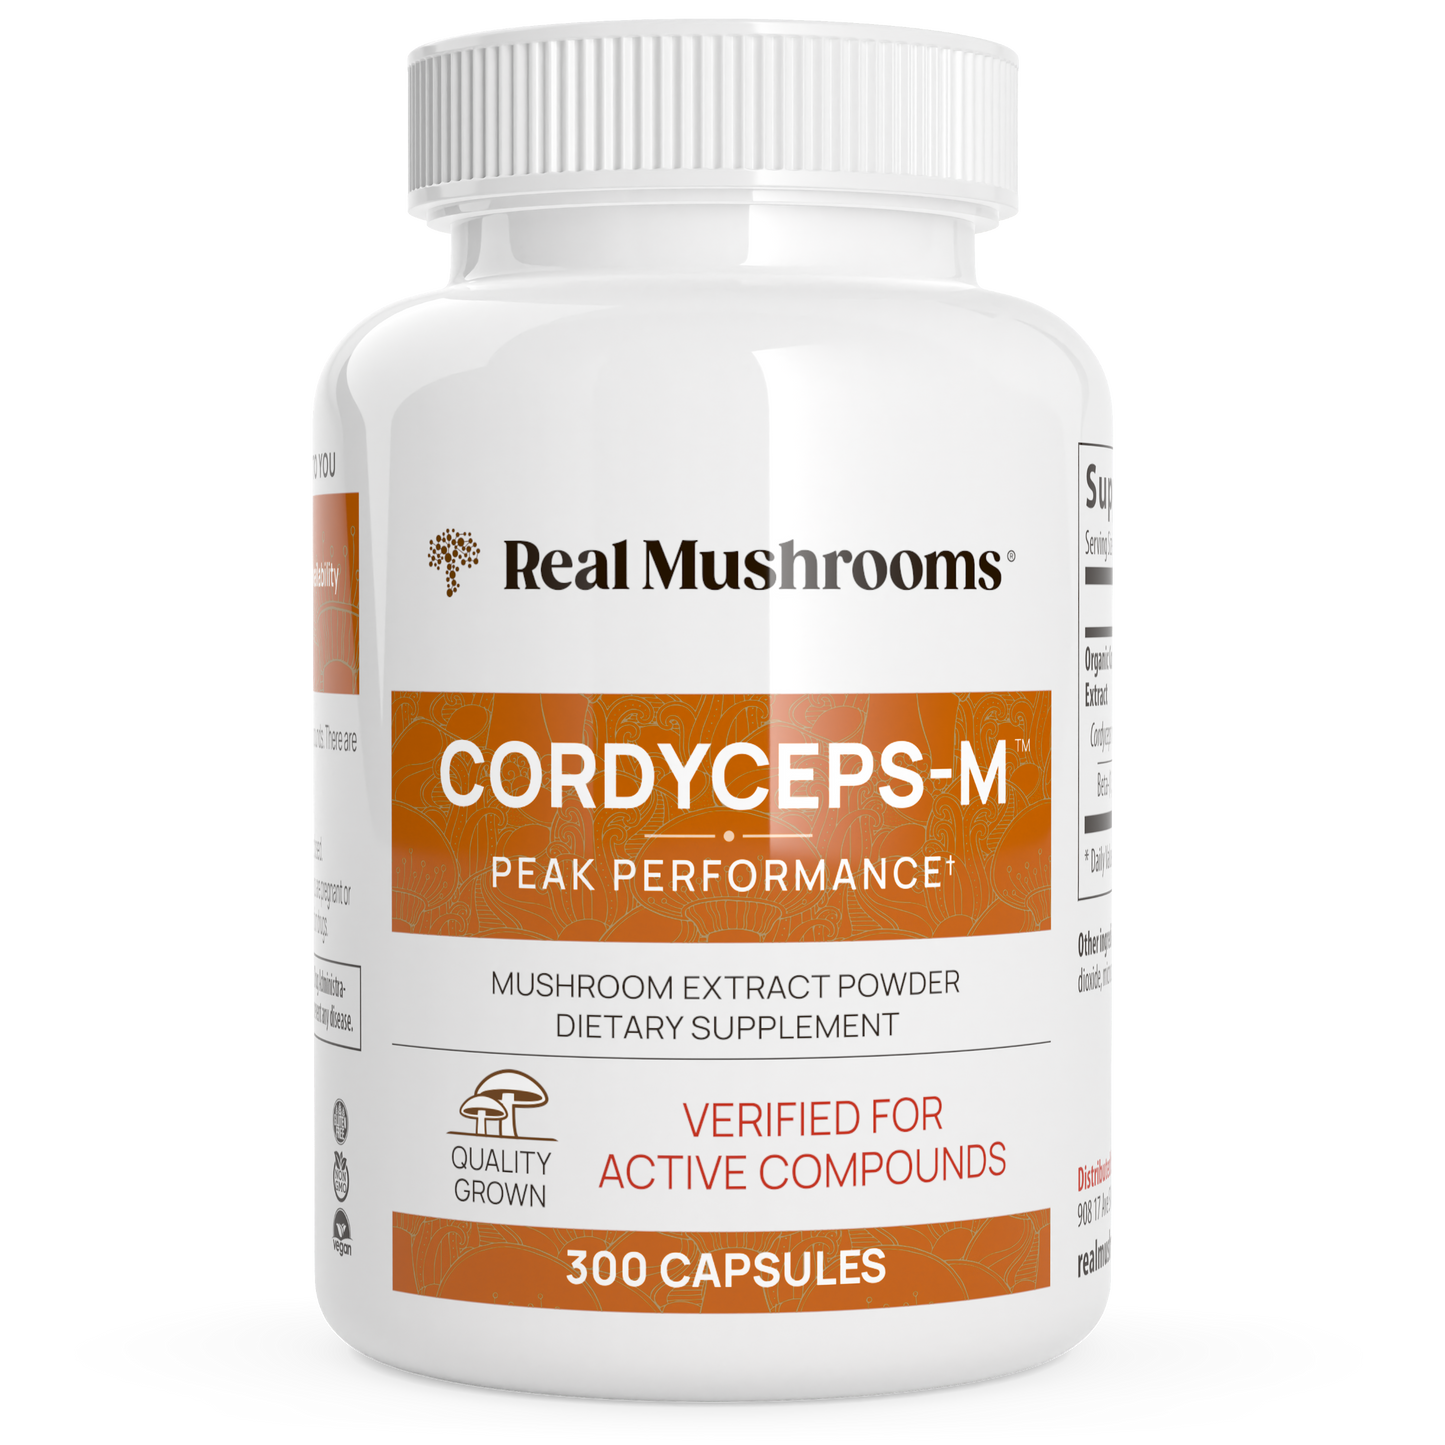 Real Mushrooms Organic Cordyceps Extract Capsules - m peak performance.